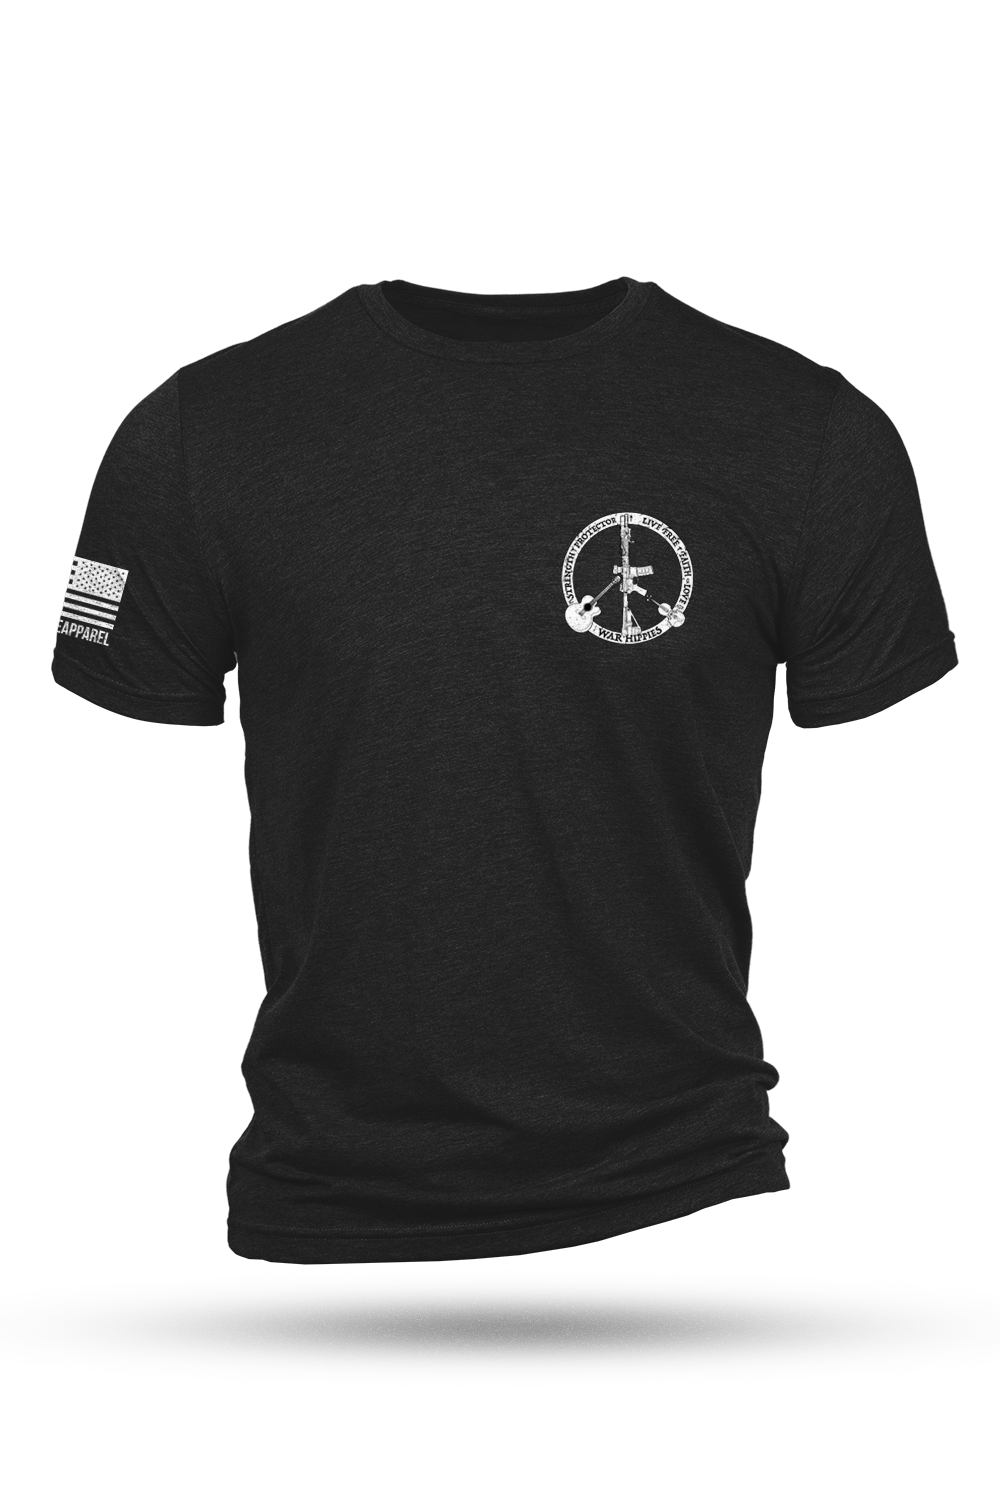 Men's Tri-Blend T-Shirt - War Hippies - Free - Nine Line Apparel